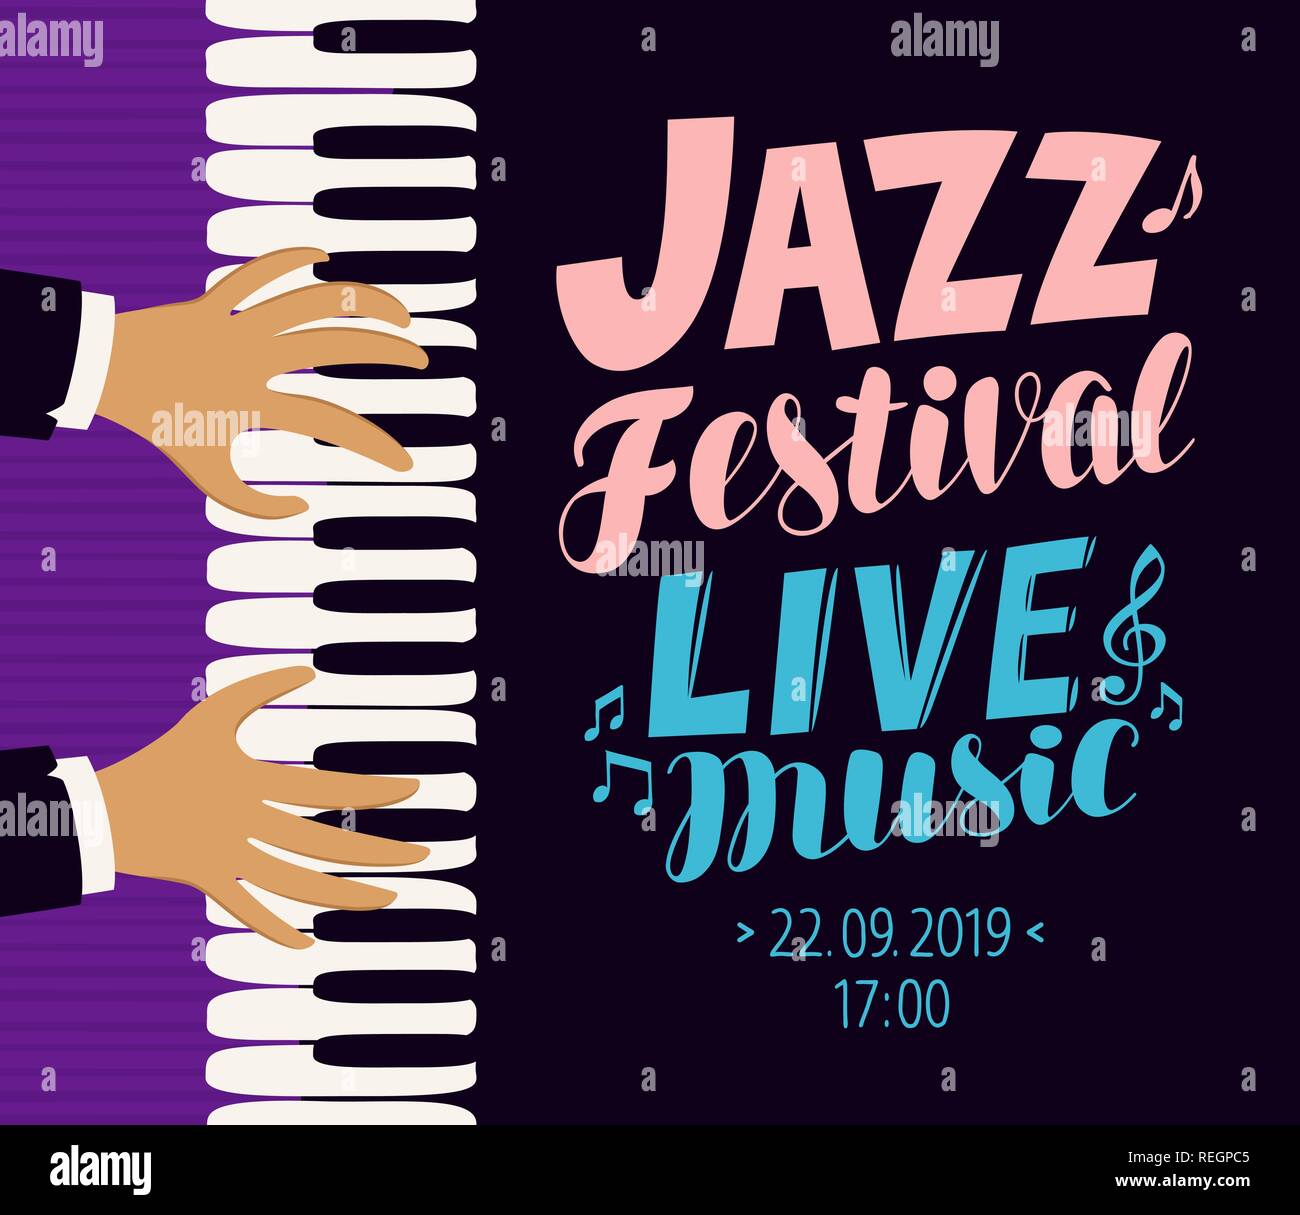 Jazz festival poster. Live music, concert concept. Vector illustration Stock Vector